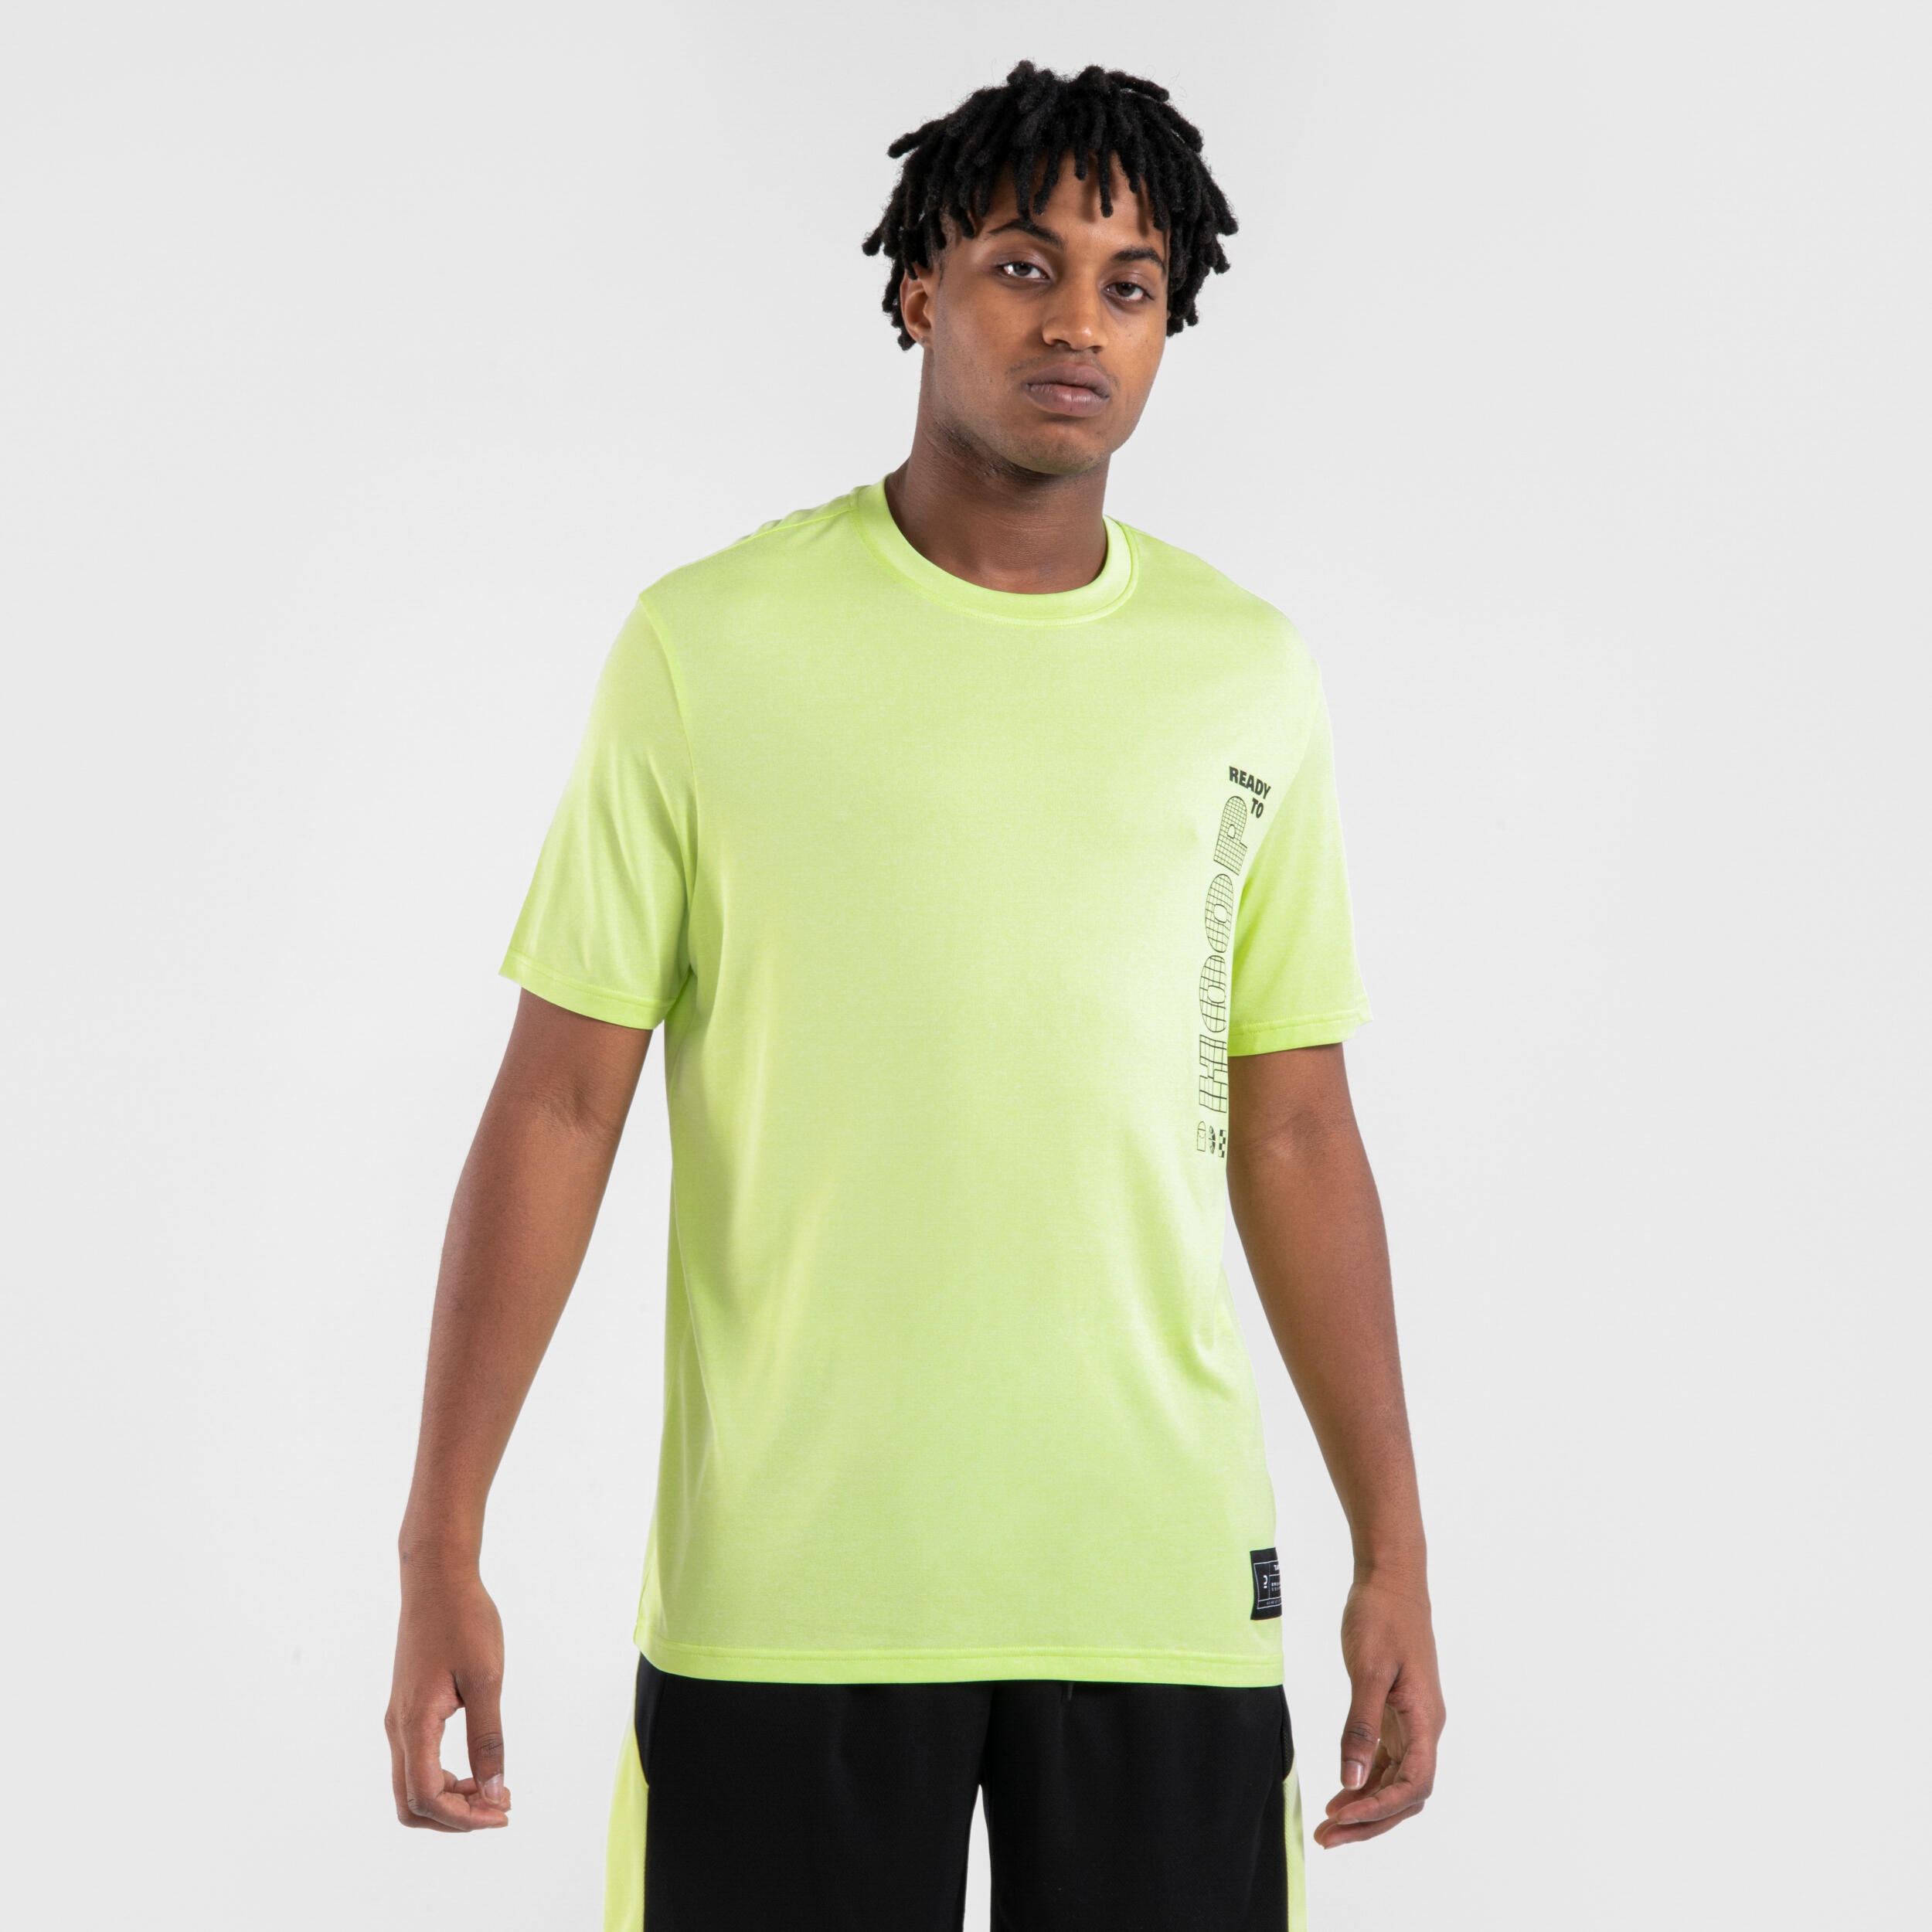 Men's/Women's Basketball T-Shirt/Jersey TS500 Fast - Yellow 1/7